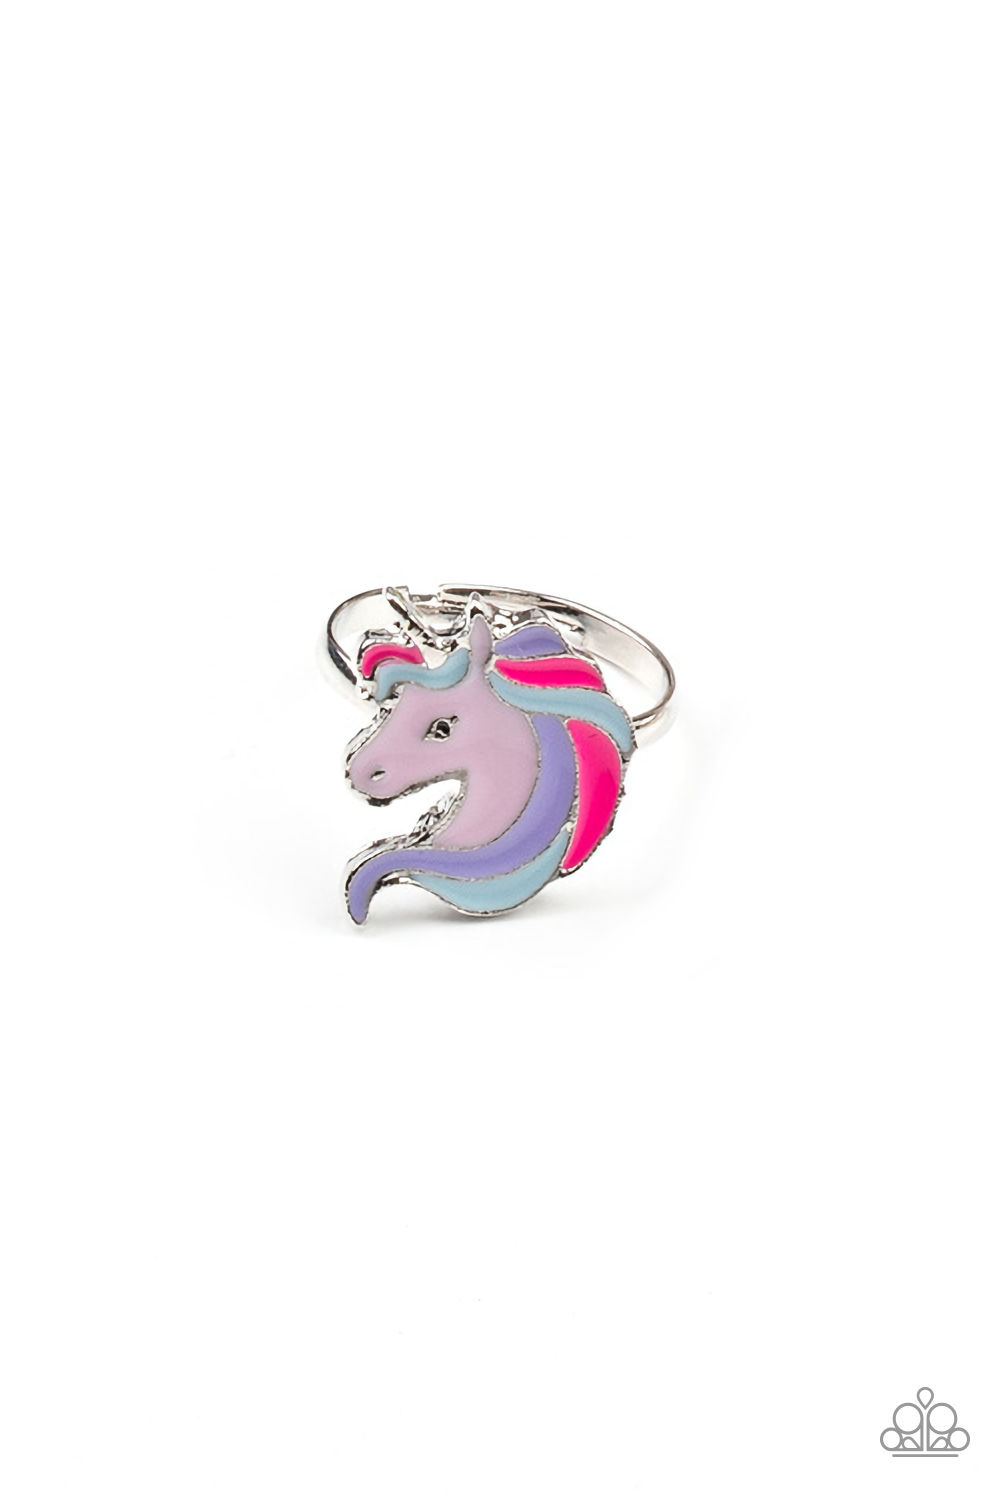 Ring - Starlet Shimmer Unicorns - Pnk/Pur/Blu/HotPnk